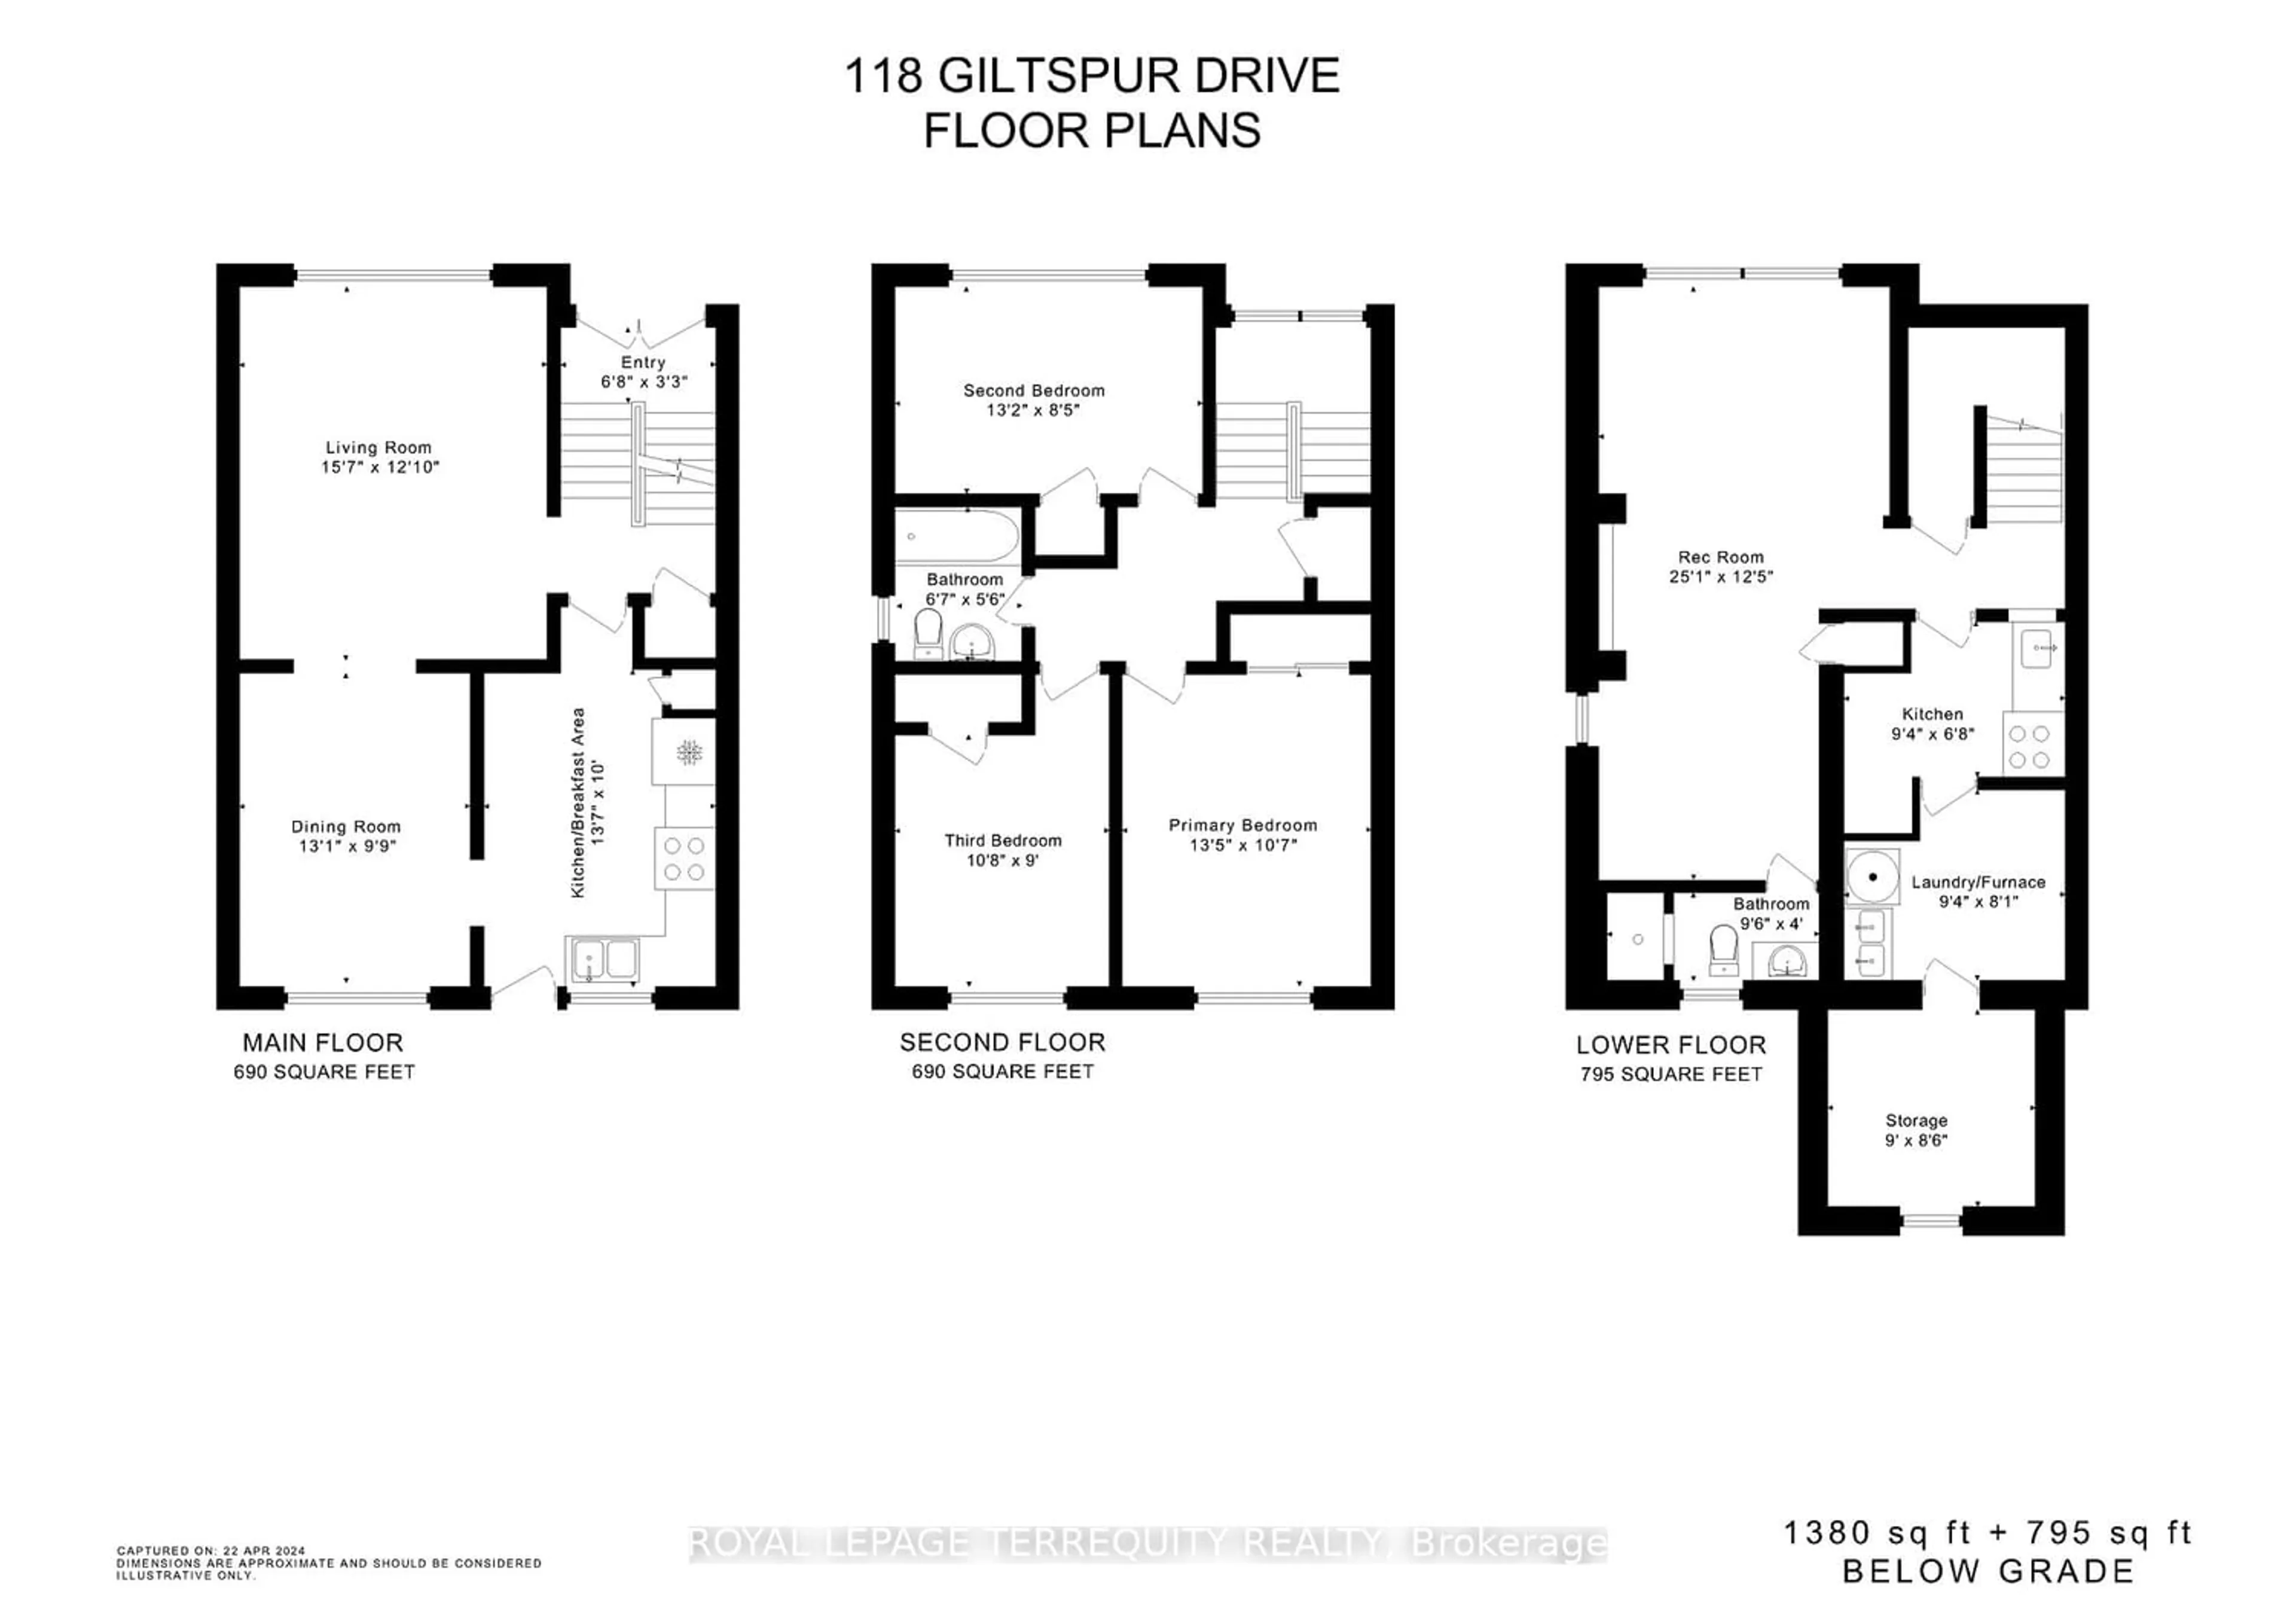 Floor plan for 118 Giltspur Dr, Toronto Ontario M3L 1M9